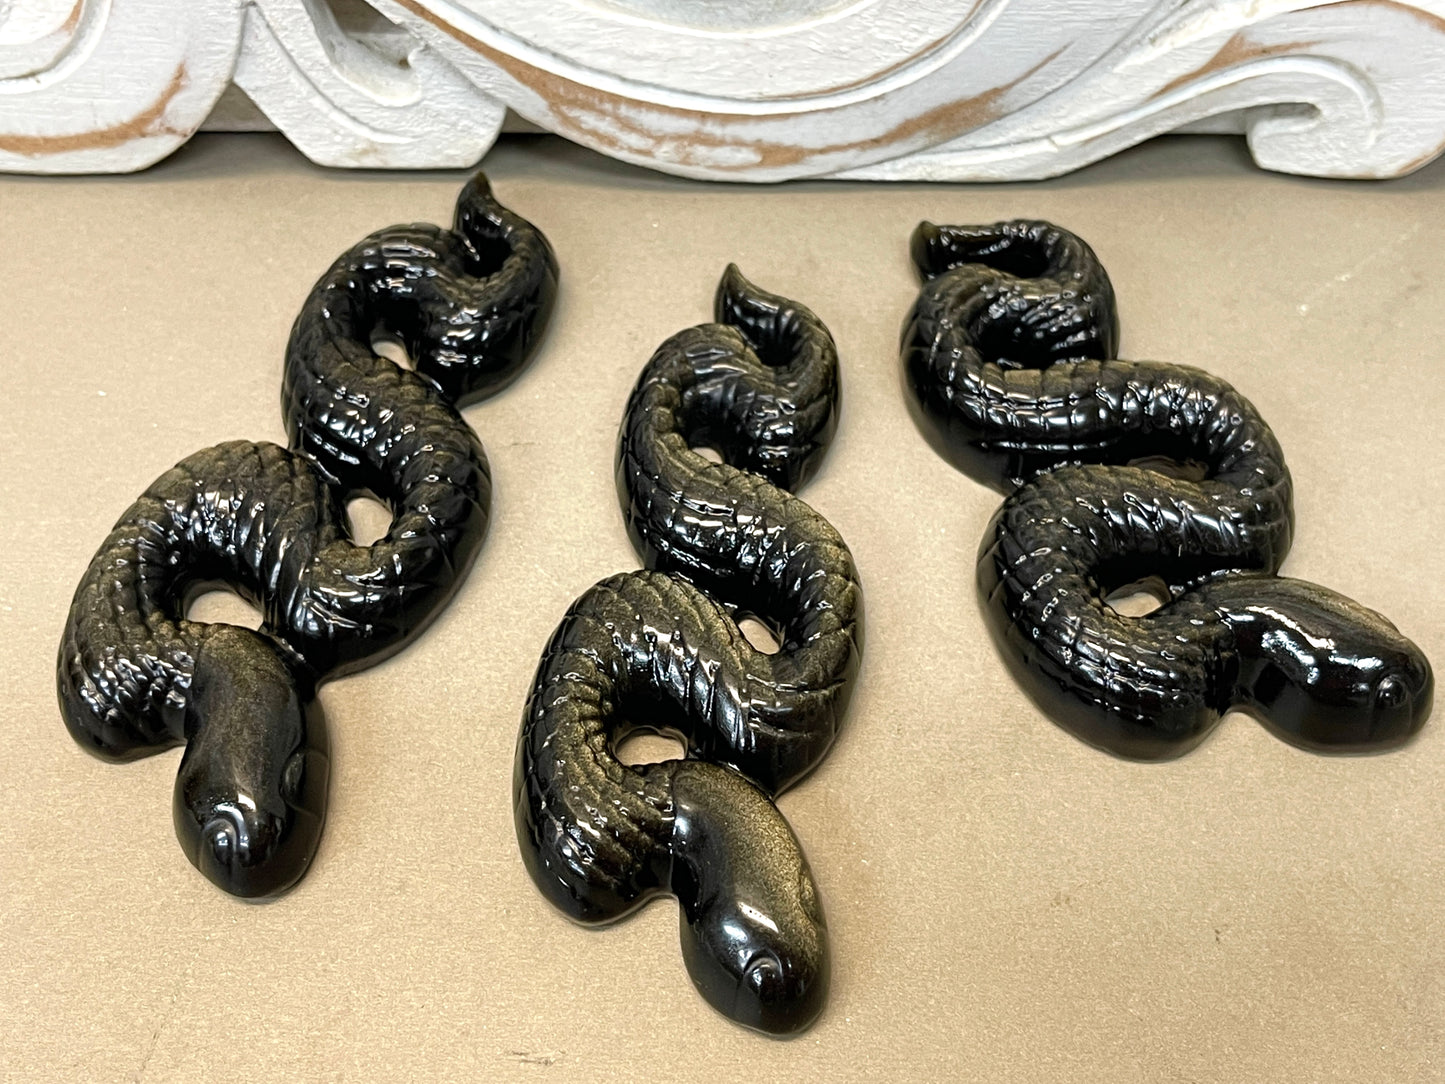 Gold Sheen Obsidian Snakes